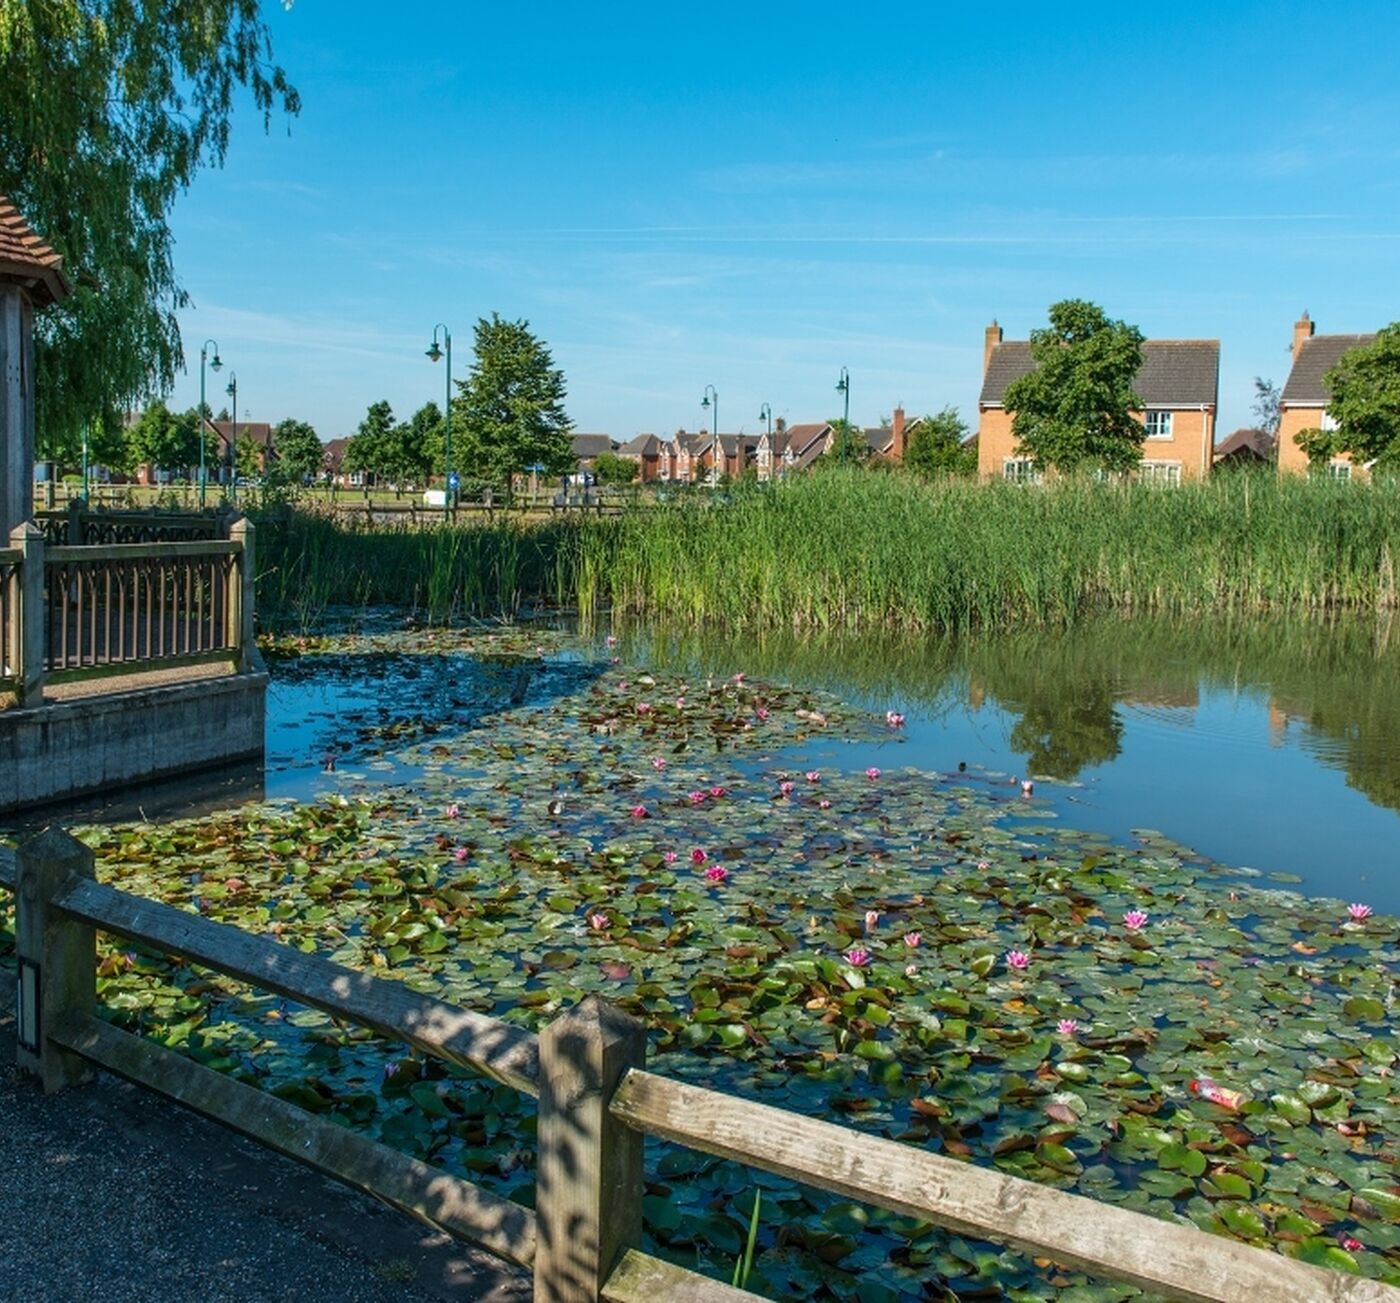 Village pond and shelter at Hampton Hargate